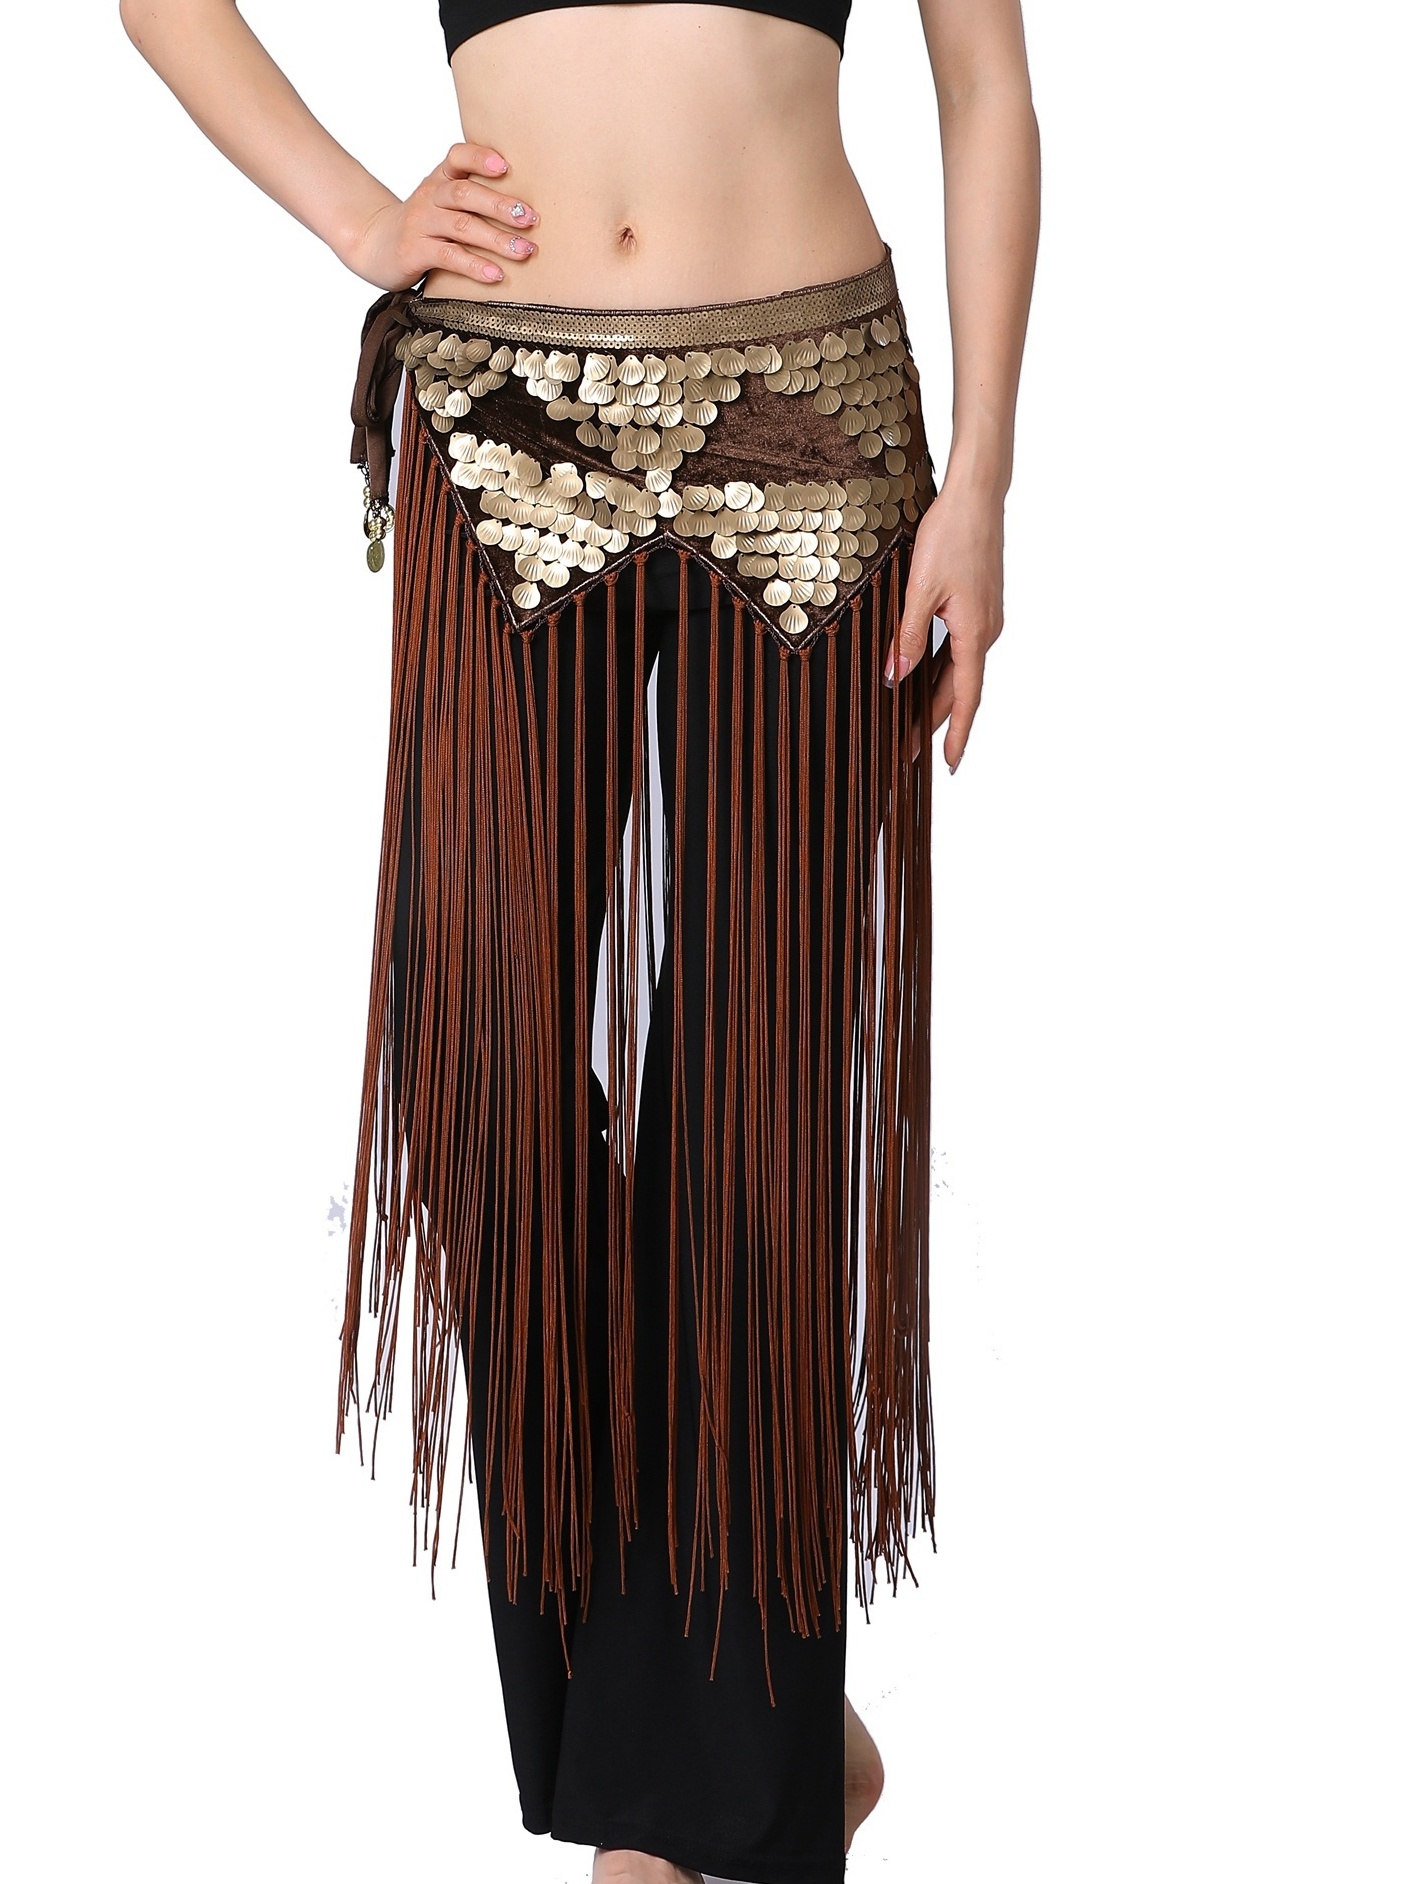 Tribal Belly Dance Costumes Vintage Coins Bra Tassel Belt Pants